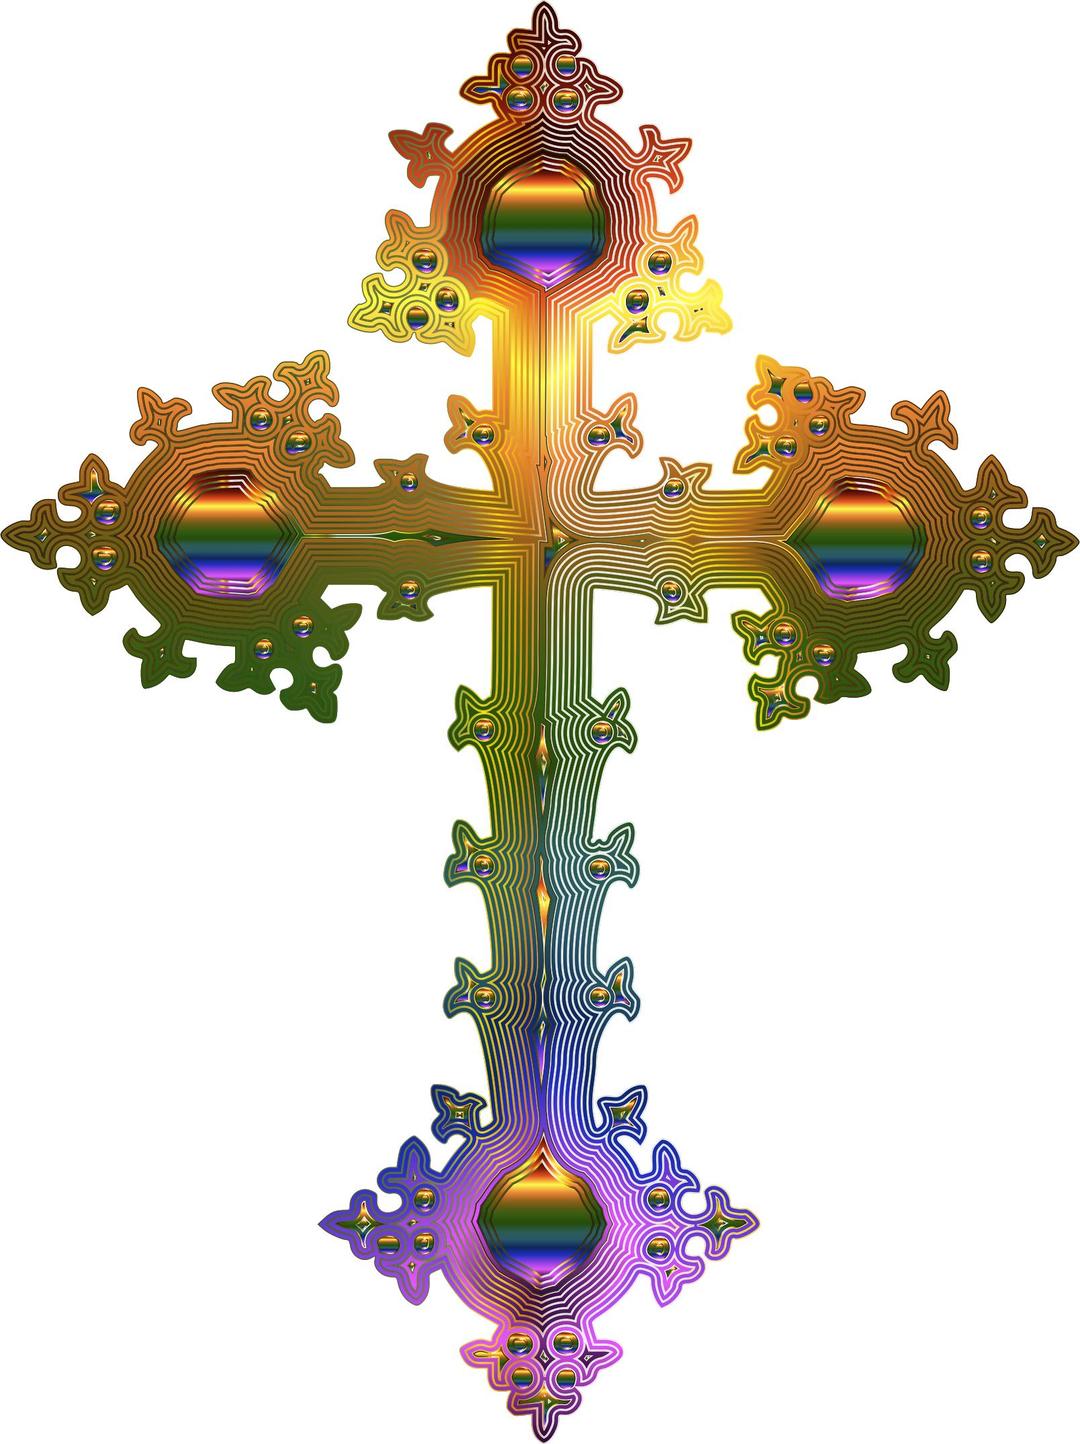 Prismatic Ornate Cross 2 No Background png transparent